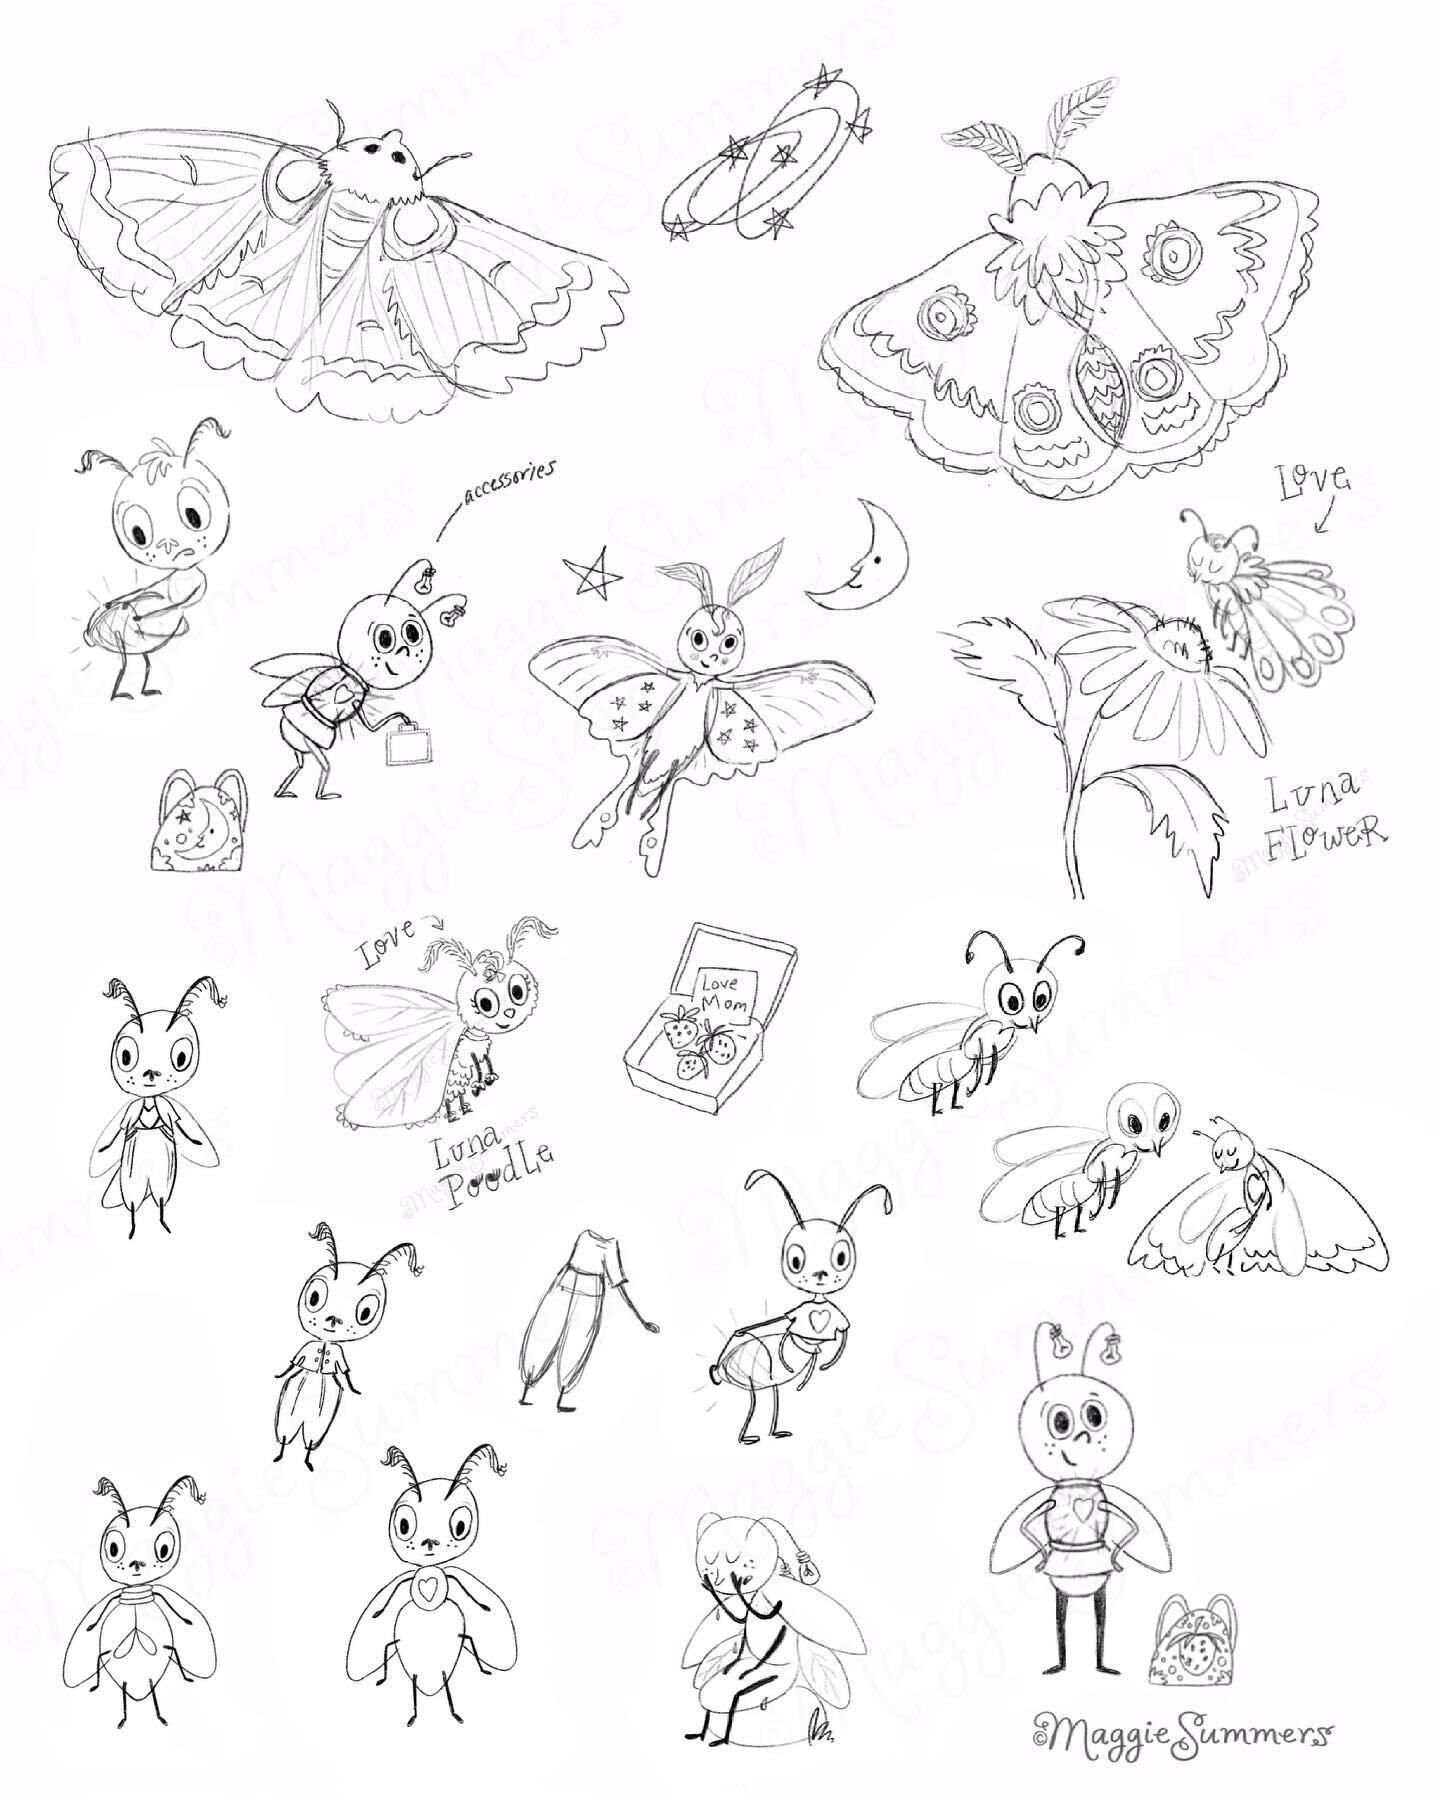 Decisions decisions. #characterdesign #sketchbook #matsicb2021 #lampy #firefly #luna ▫️
.
.
.
.
.
.
#charactersketches #childrensbook 
#maggiesummerssketchbook #matsicb #bugs #fireflies #moths #Illustratorsofinstagram #kidlitart
#matsicb8 #sketchbook